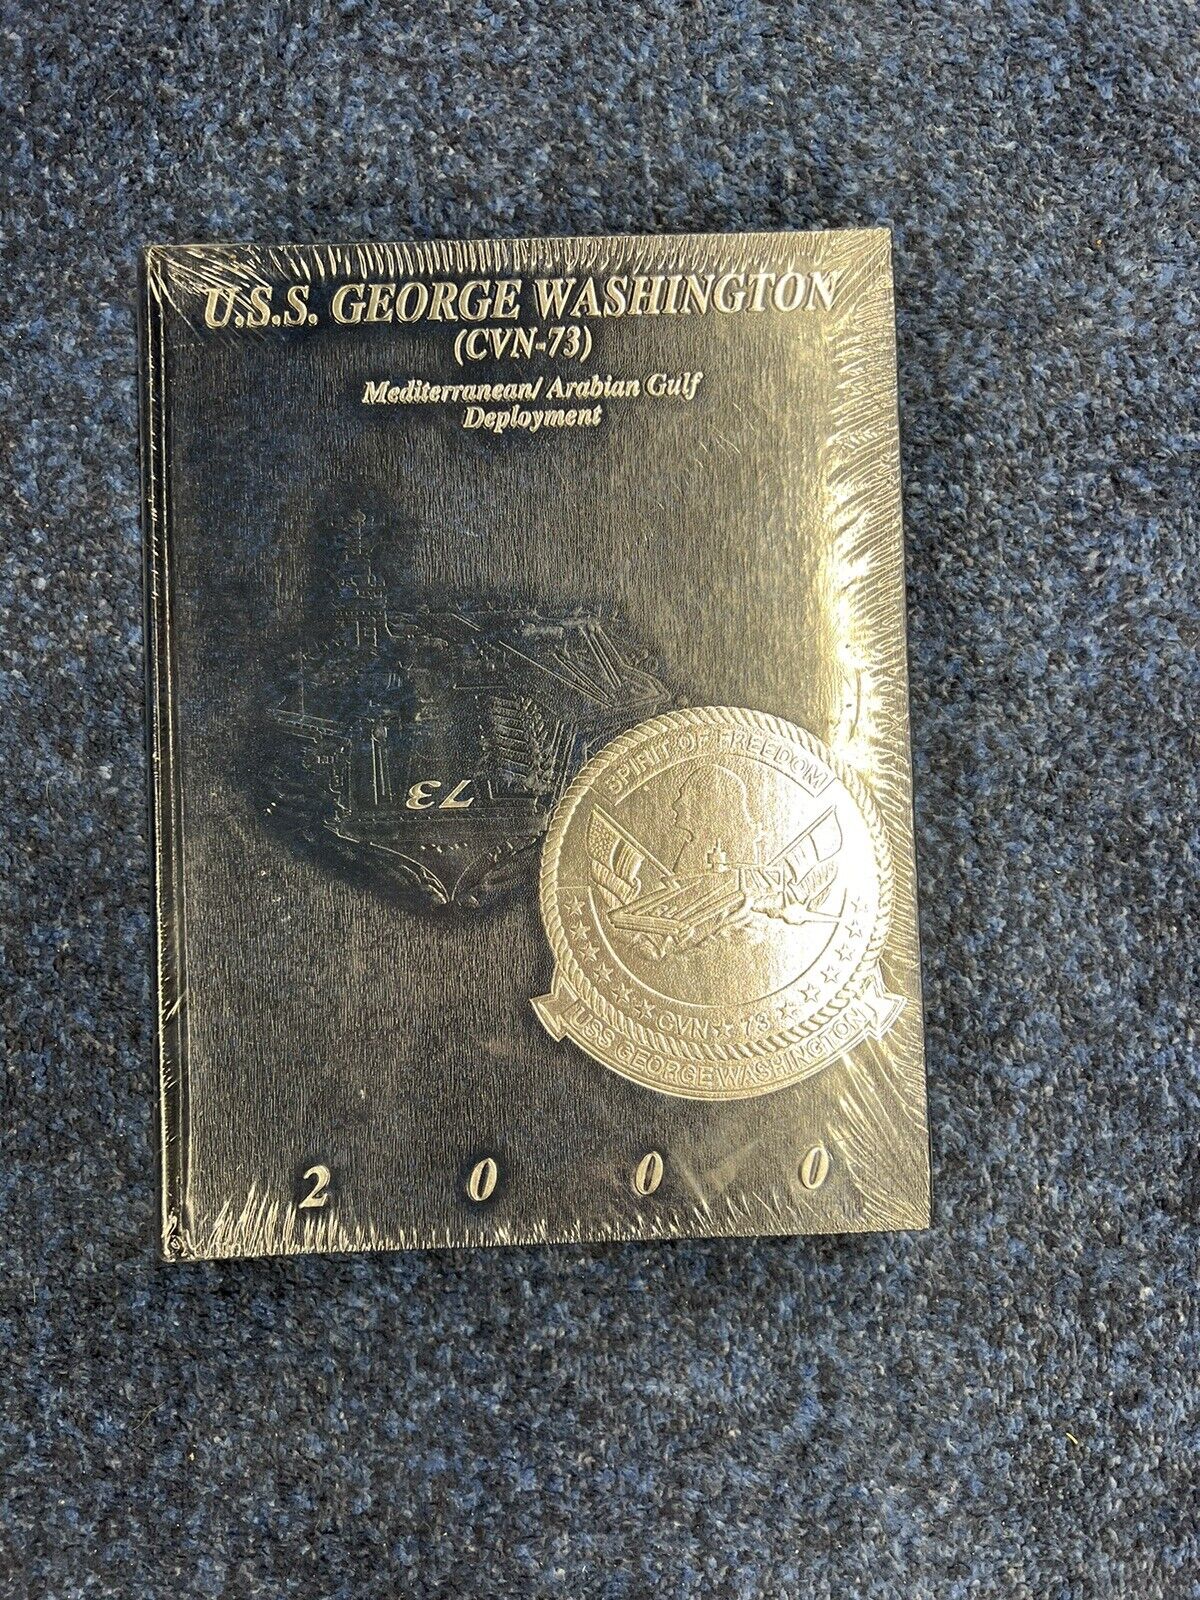 USS George Washington (CVN-73) 2000 Cruise Book United States Navy (new in wrap)